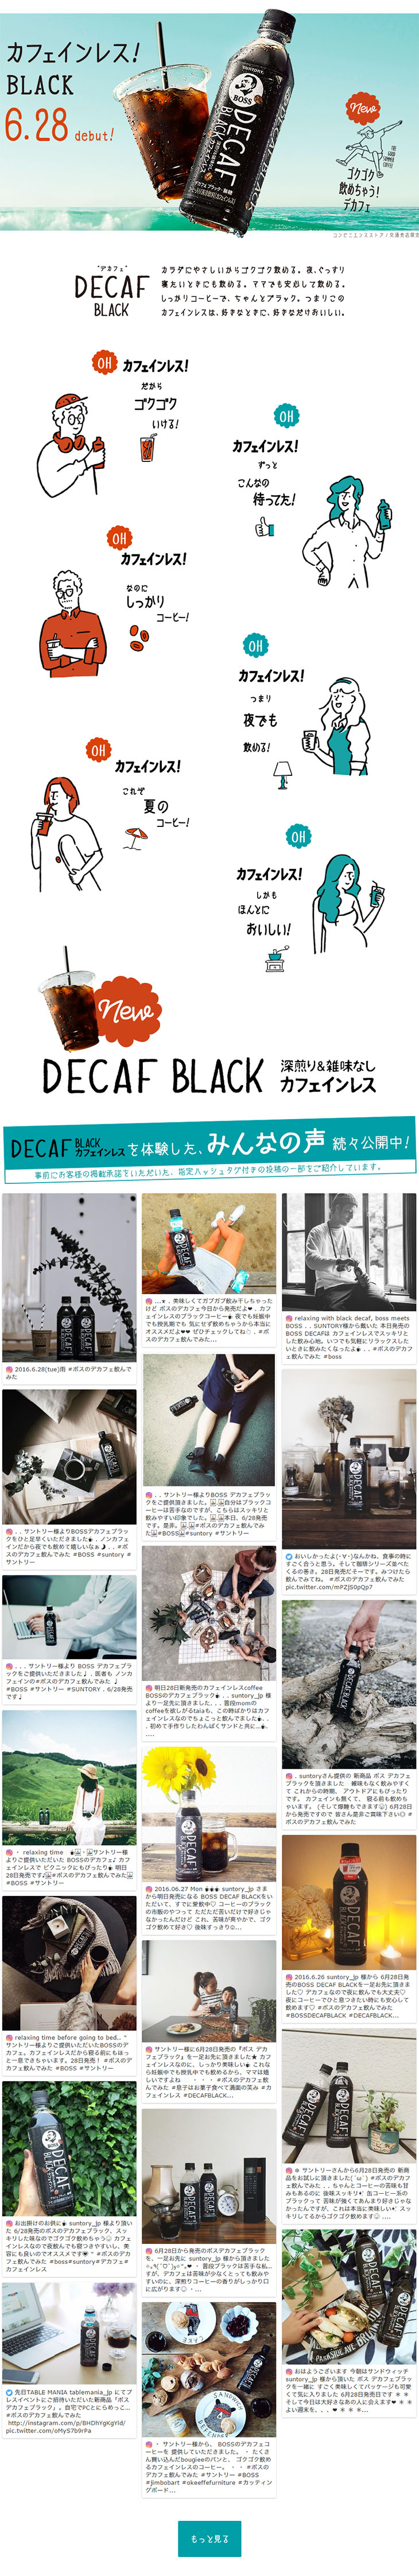 DECAF BLACK_pc_1